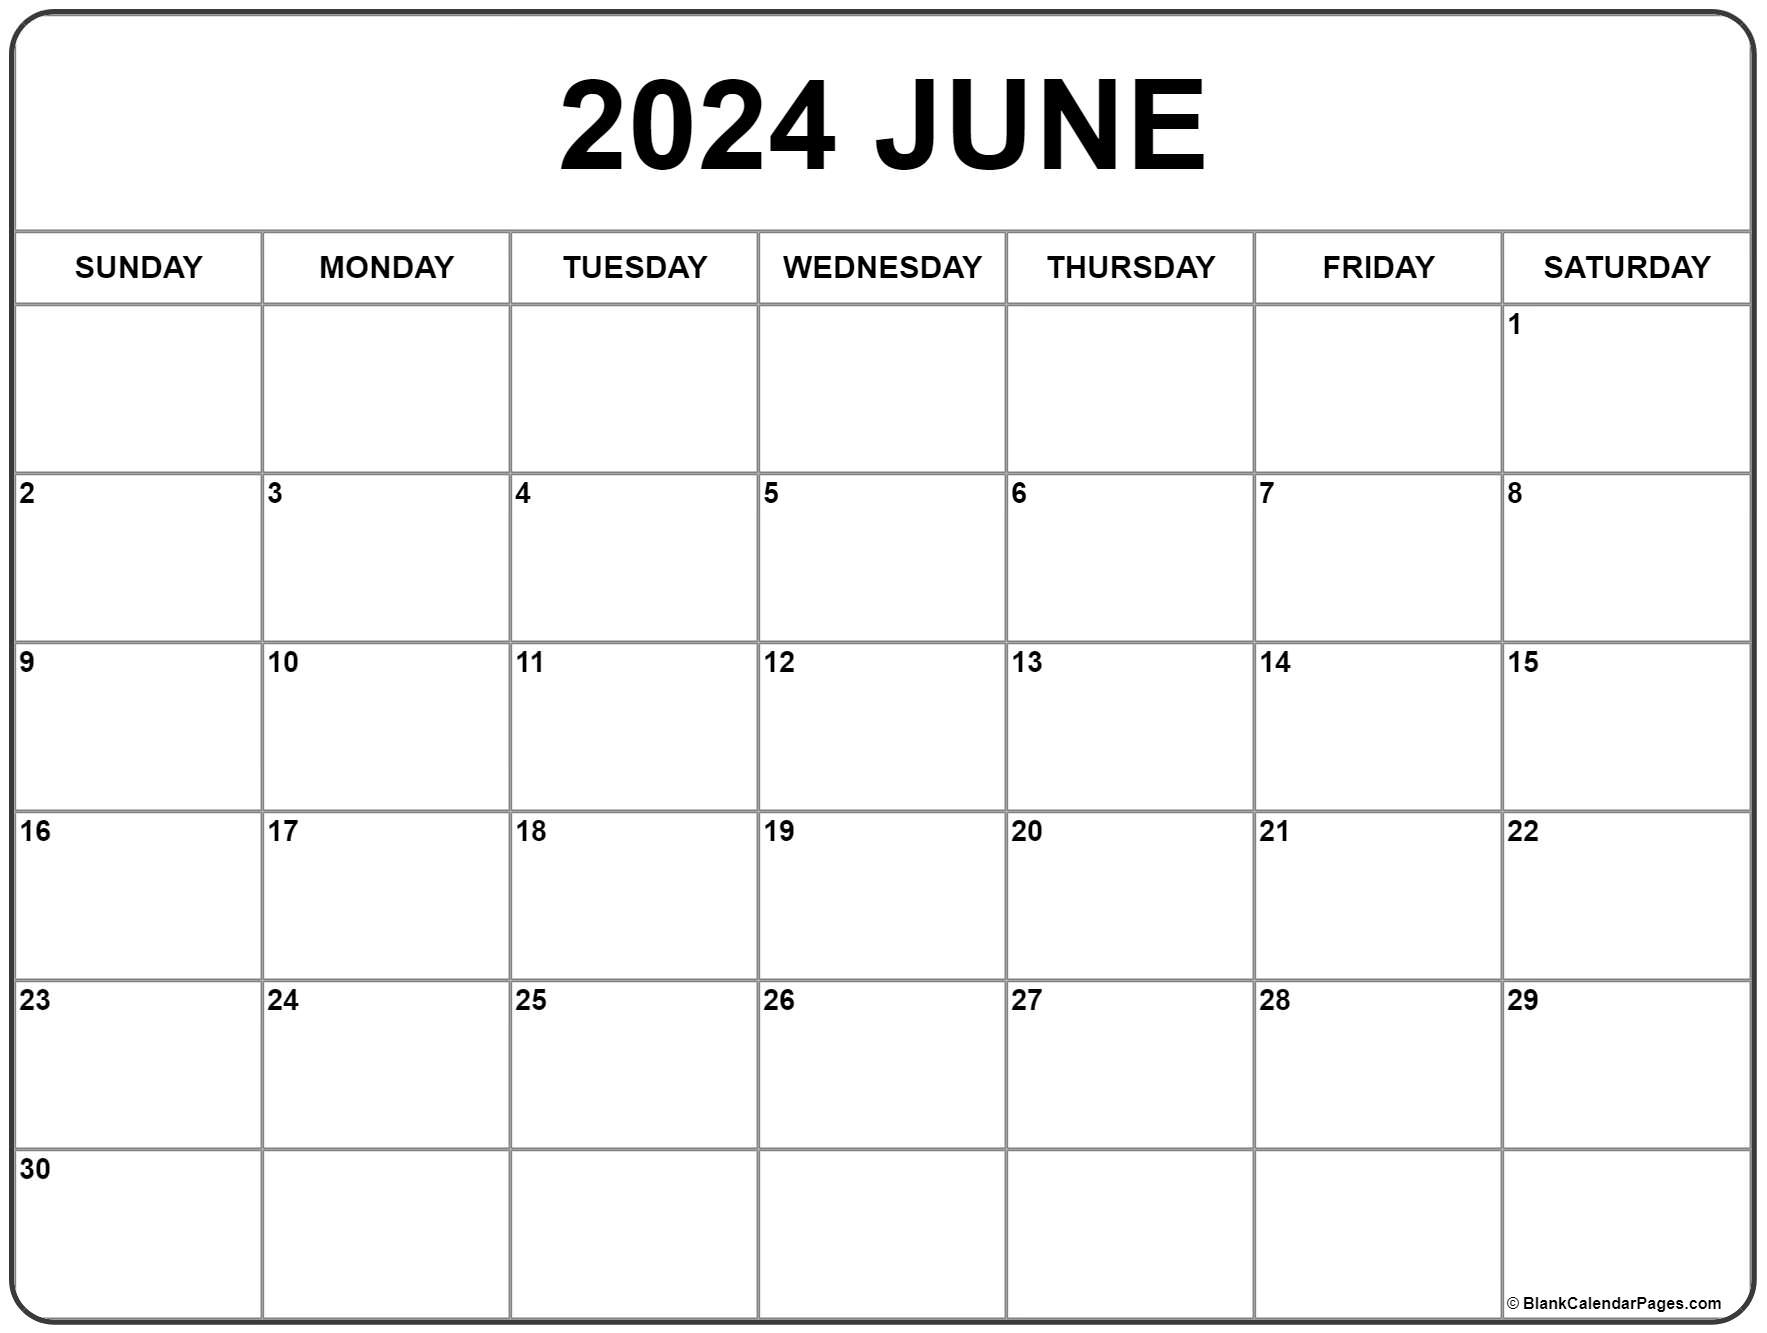 June 2024 Calendar | Free Printable Calendar within June 24 Calendar 2024